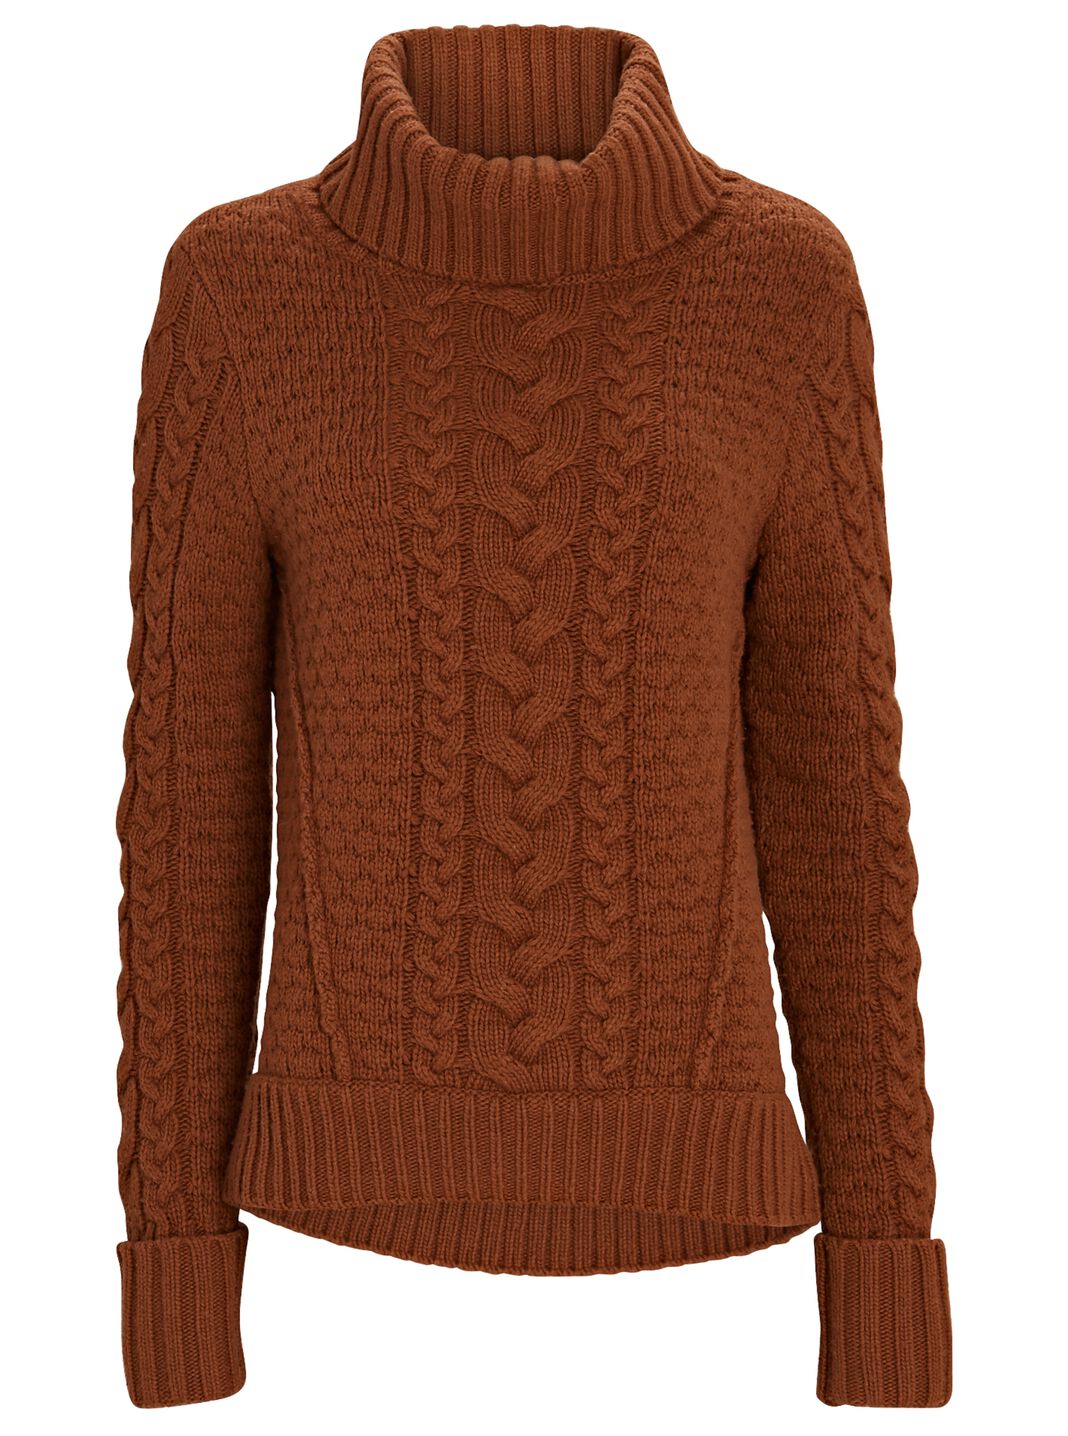 Sereia Cable Knit Turtleneck Sweater